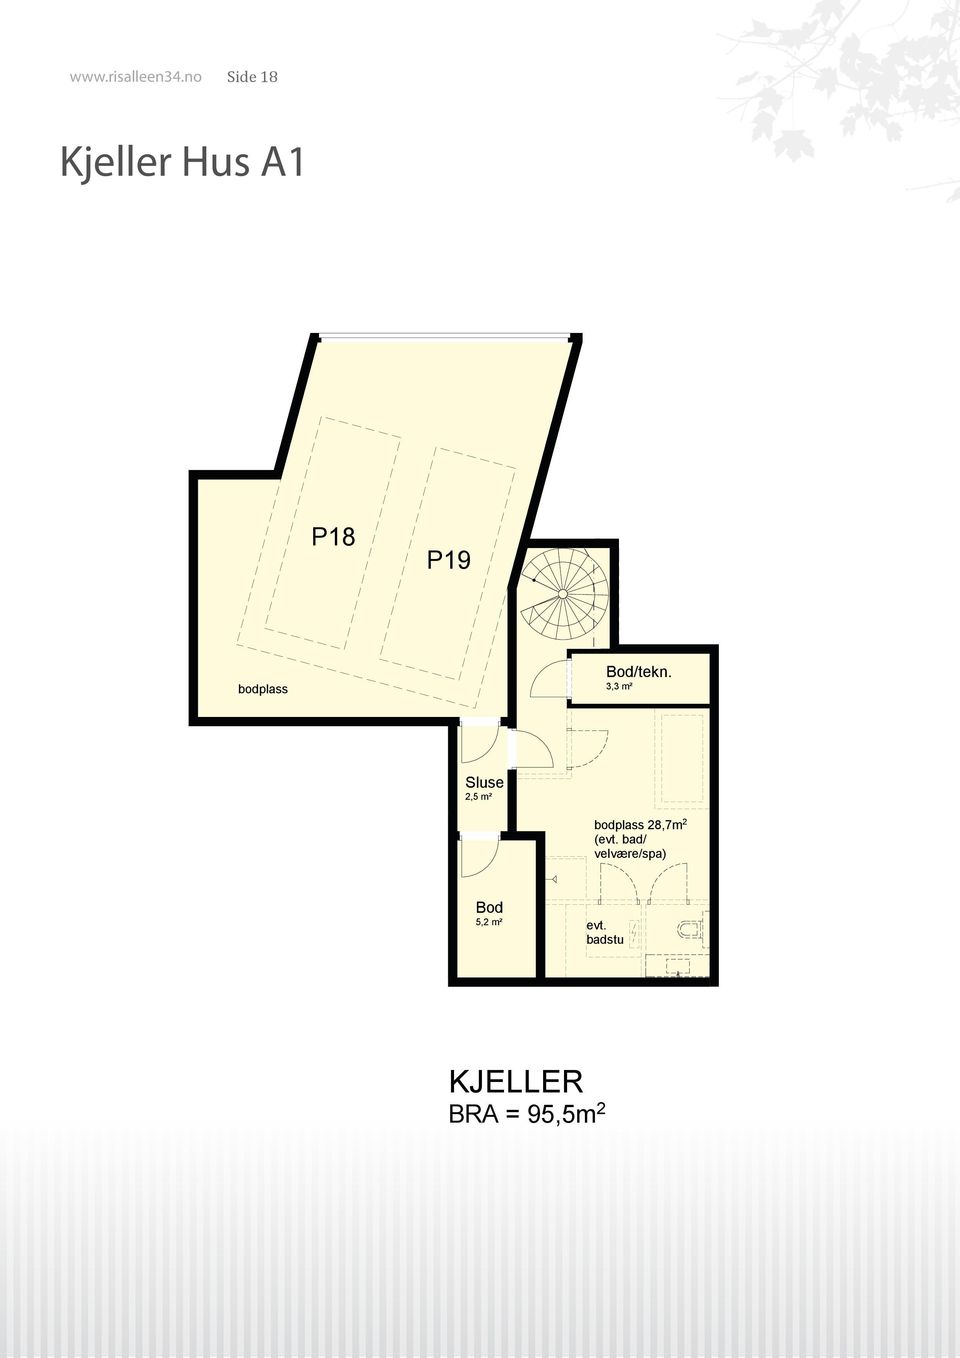 3,3 m² bodplass felles-bod Sluse 11,0 m² 2,5 m² bodplass 28,7m2